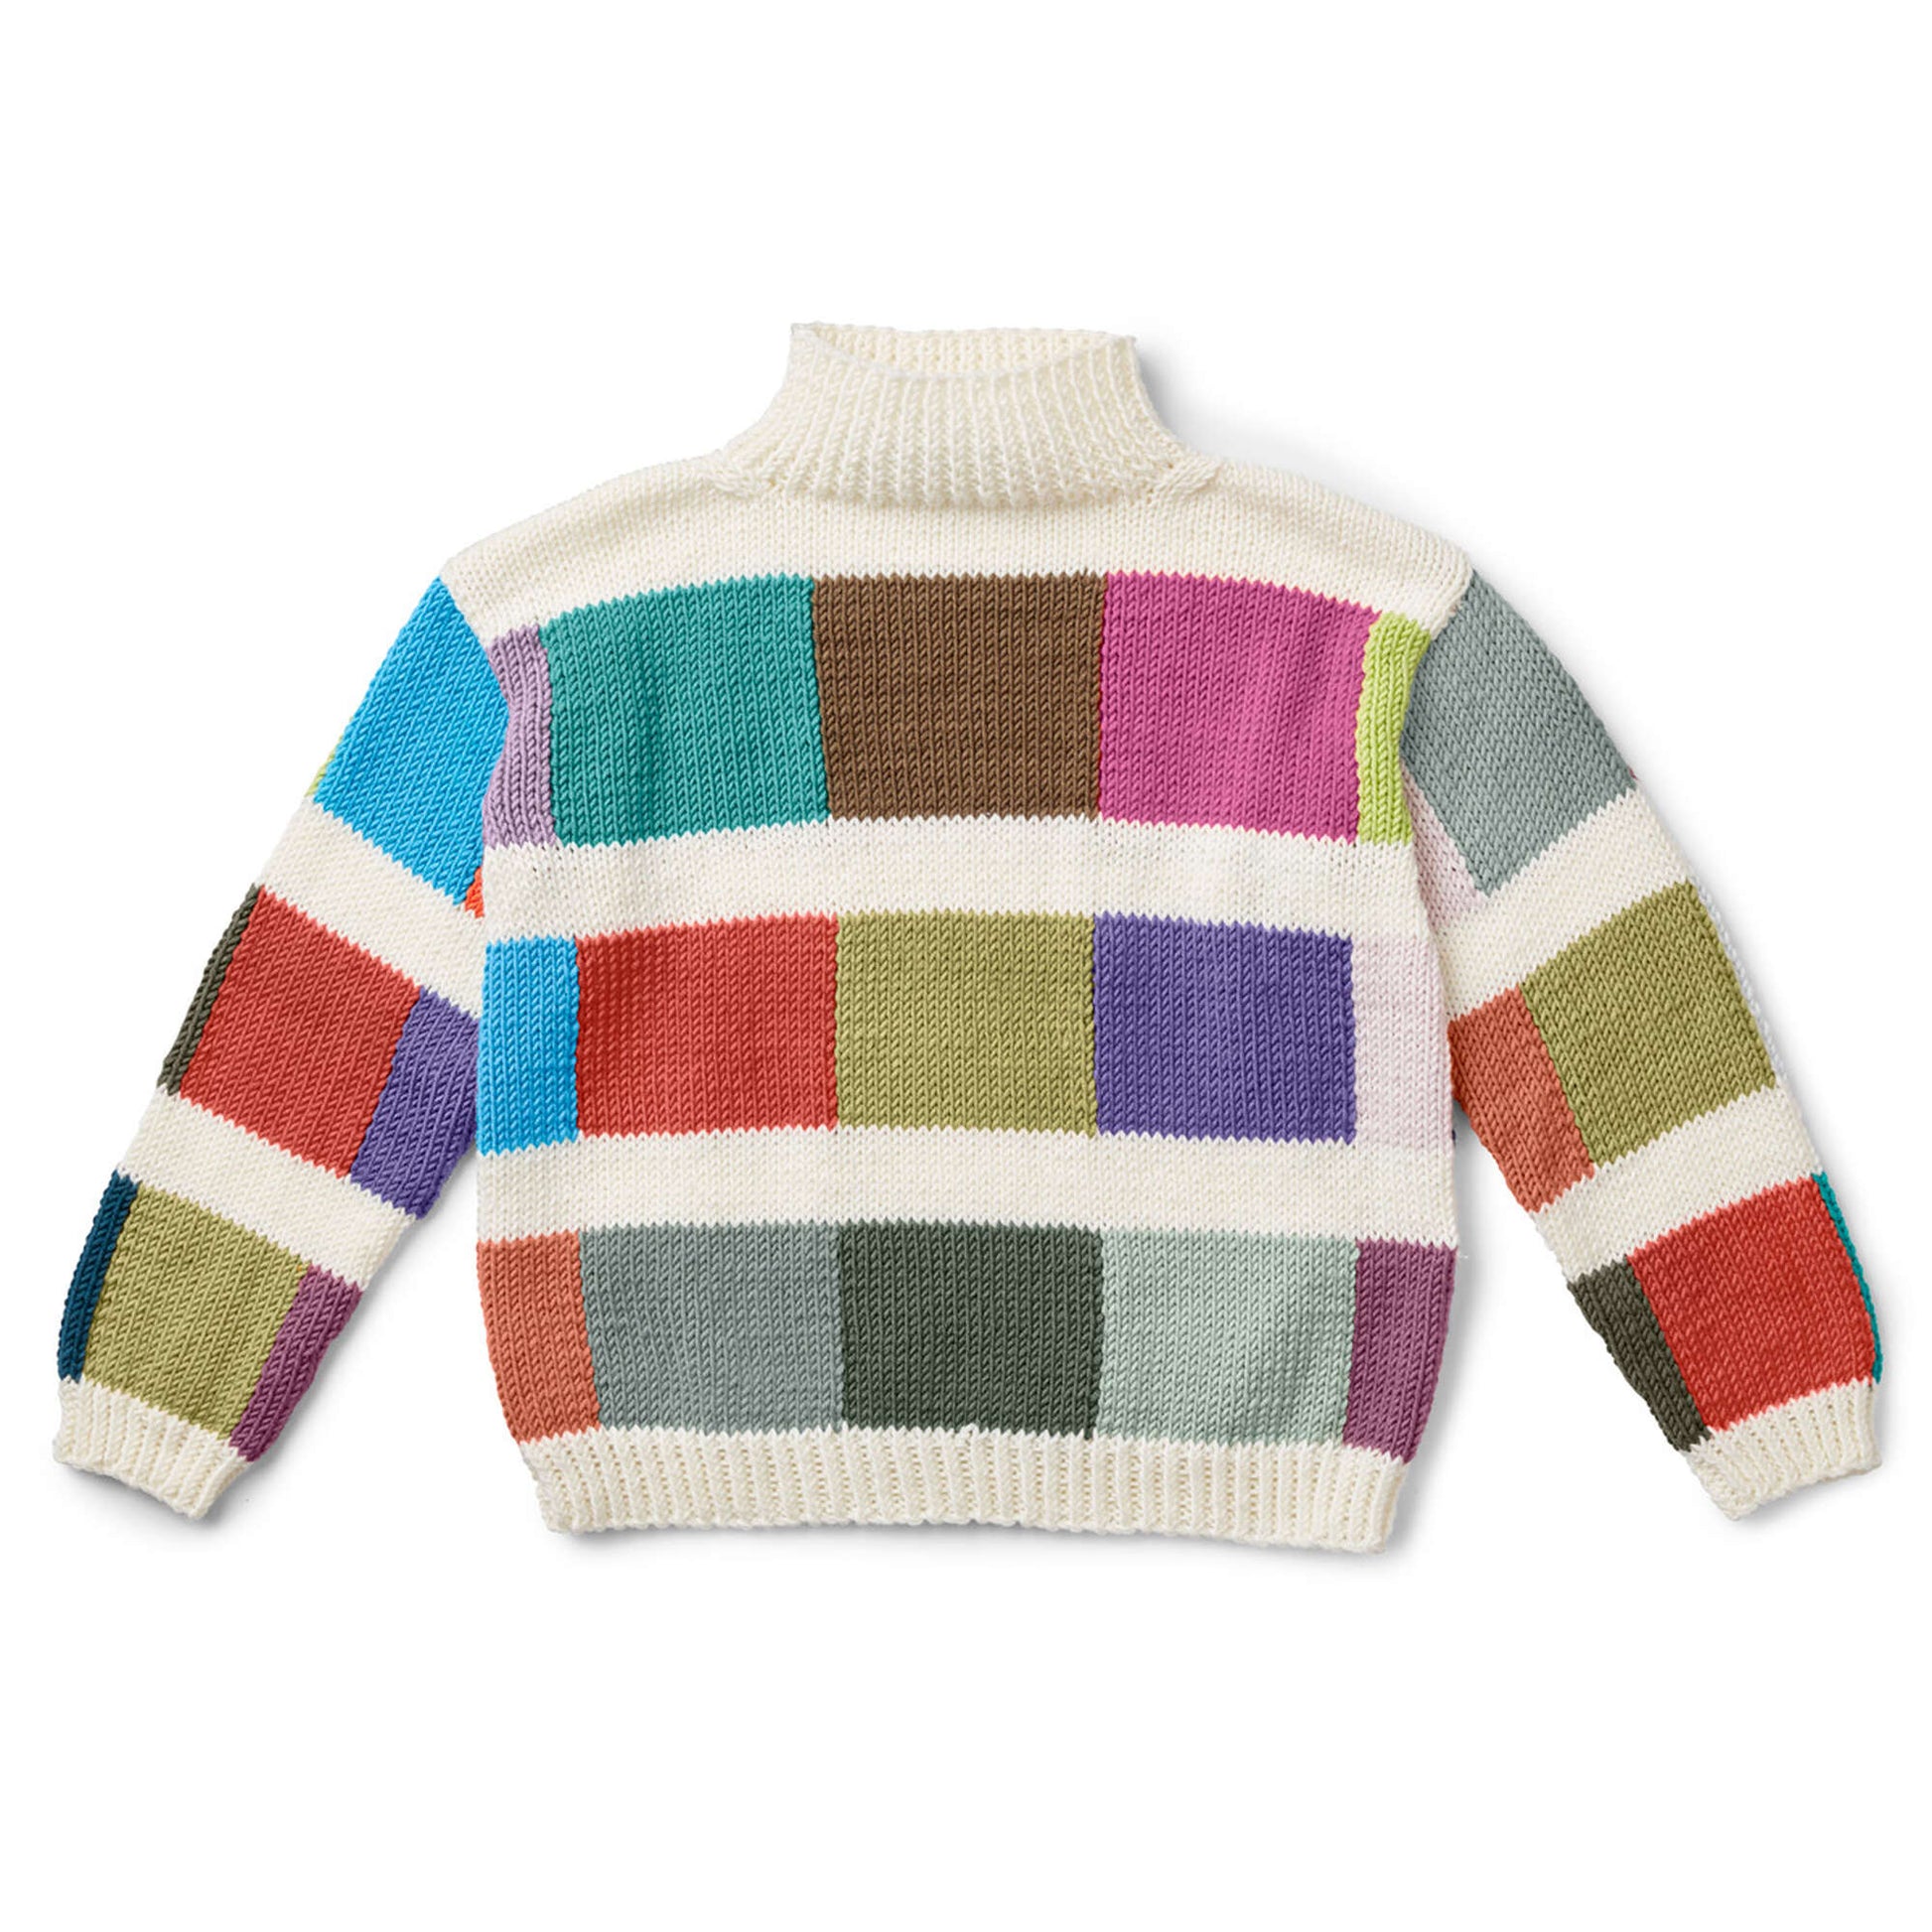 Free Caron X Pantone Monochrome Swatch Knit Sweater Pattern